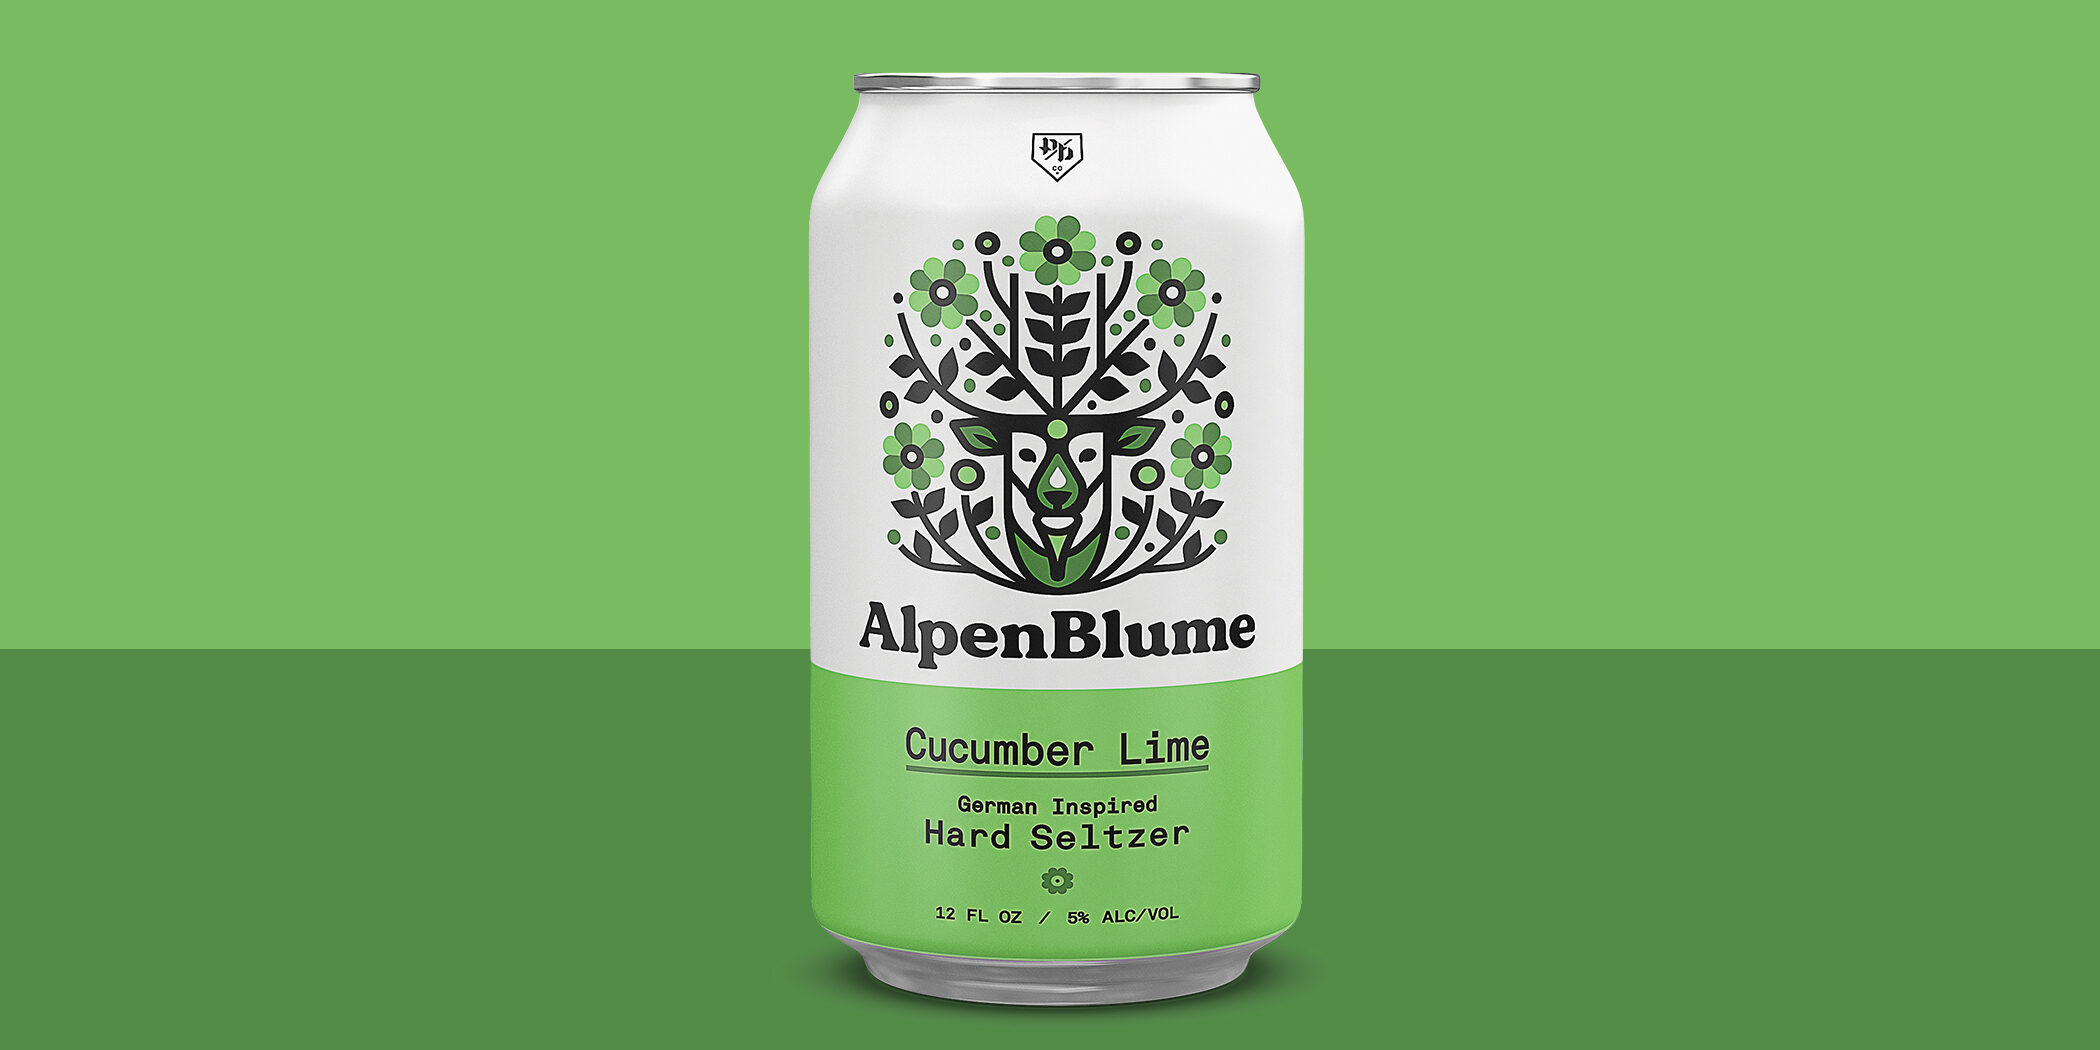 AlpenBlume German-Inspired Hard Seltzer by Prost Brewing